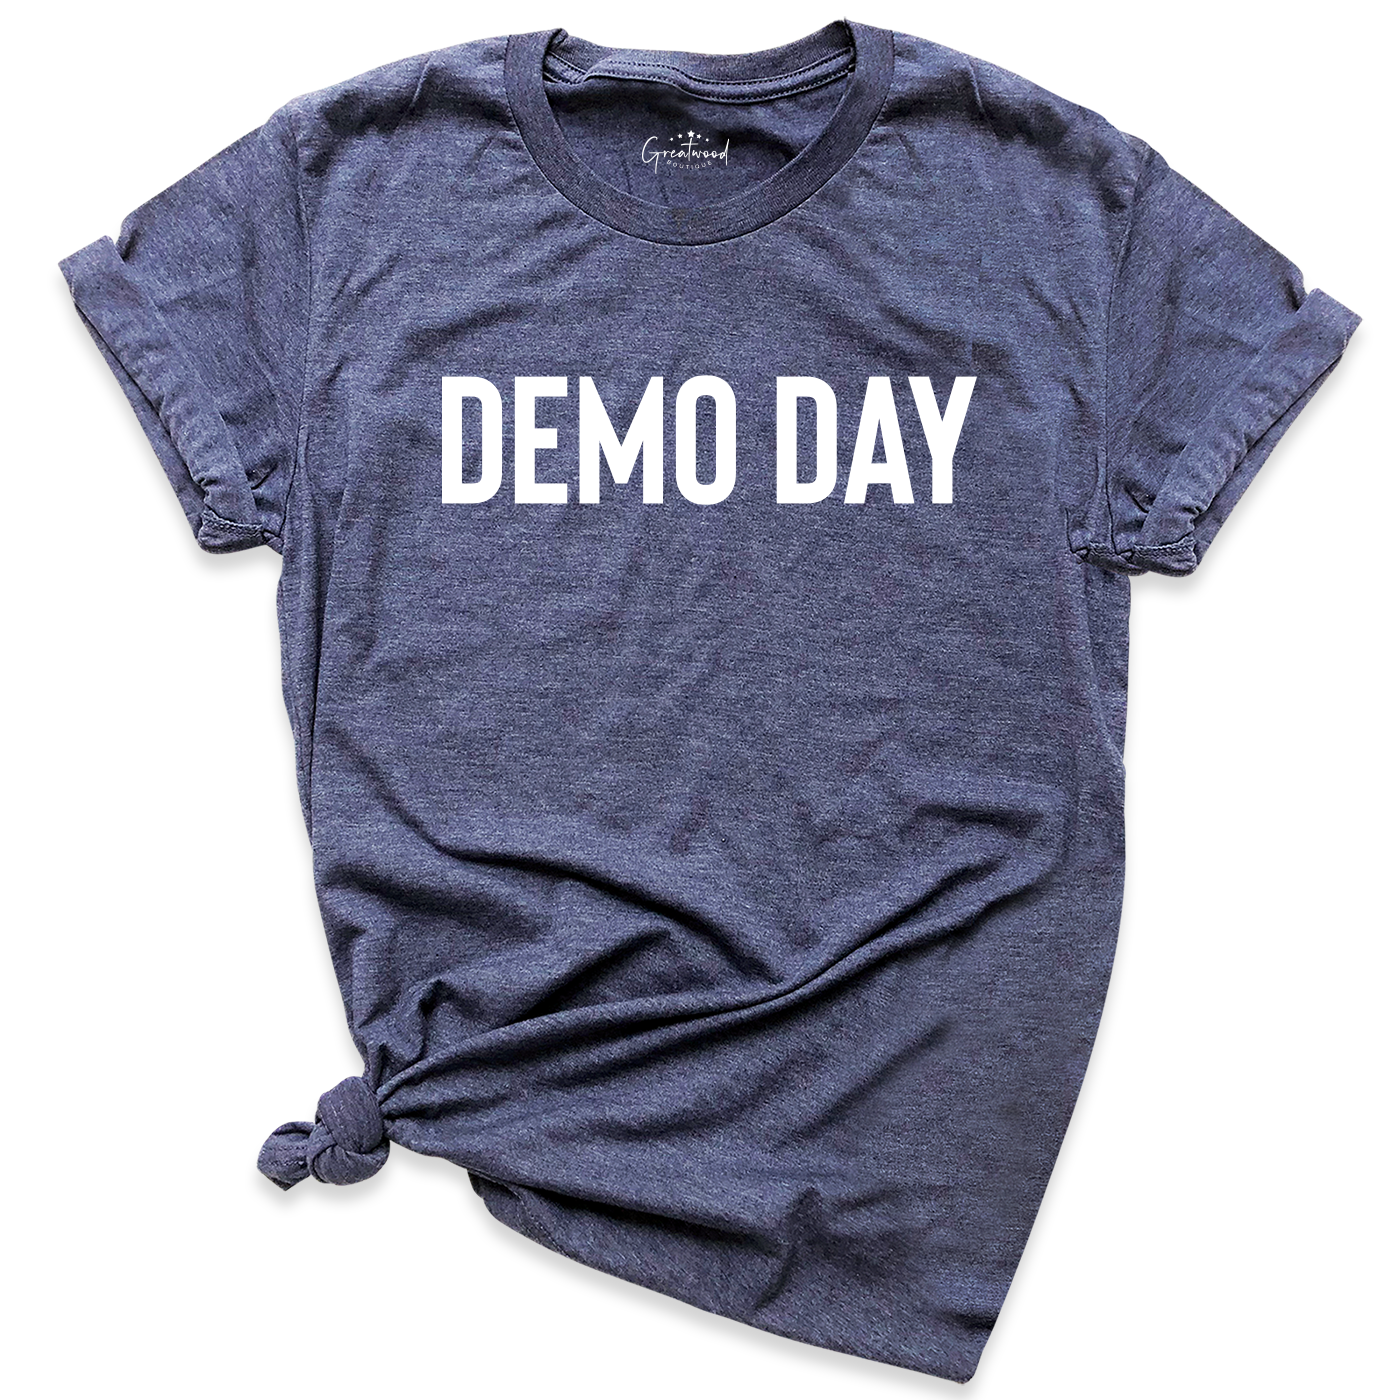 Demo Day Shirt